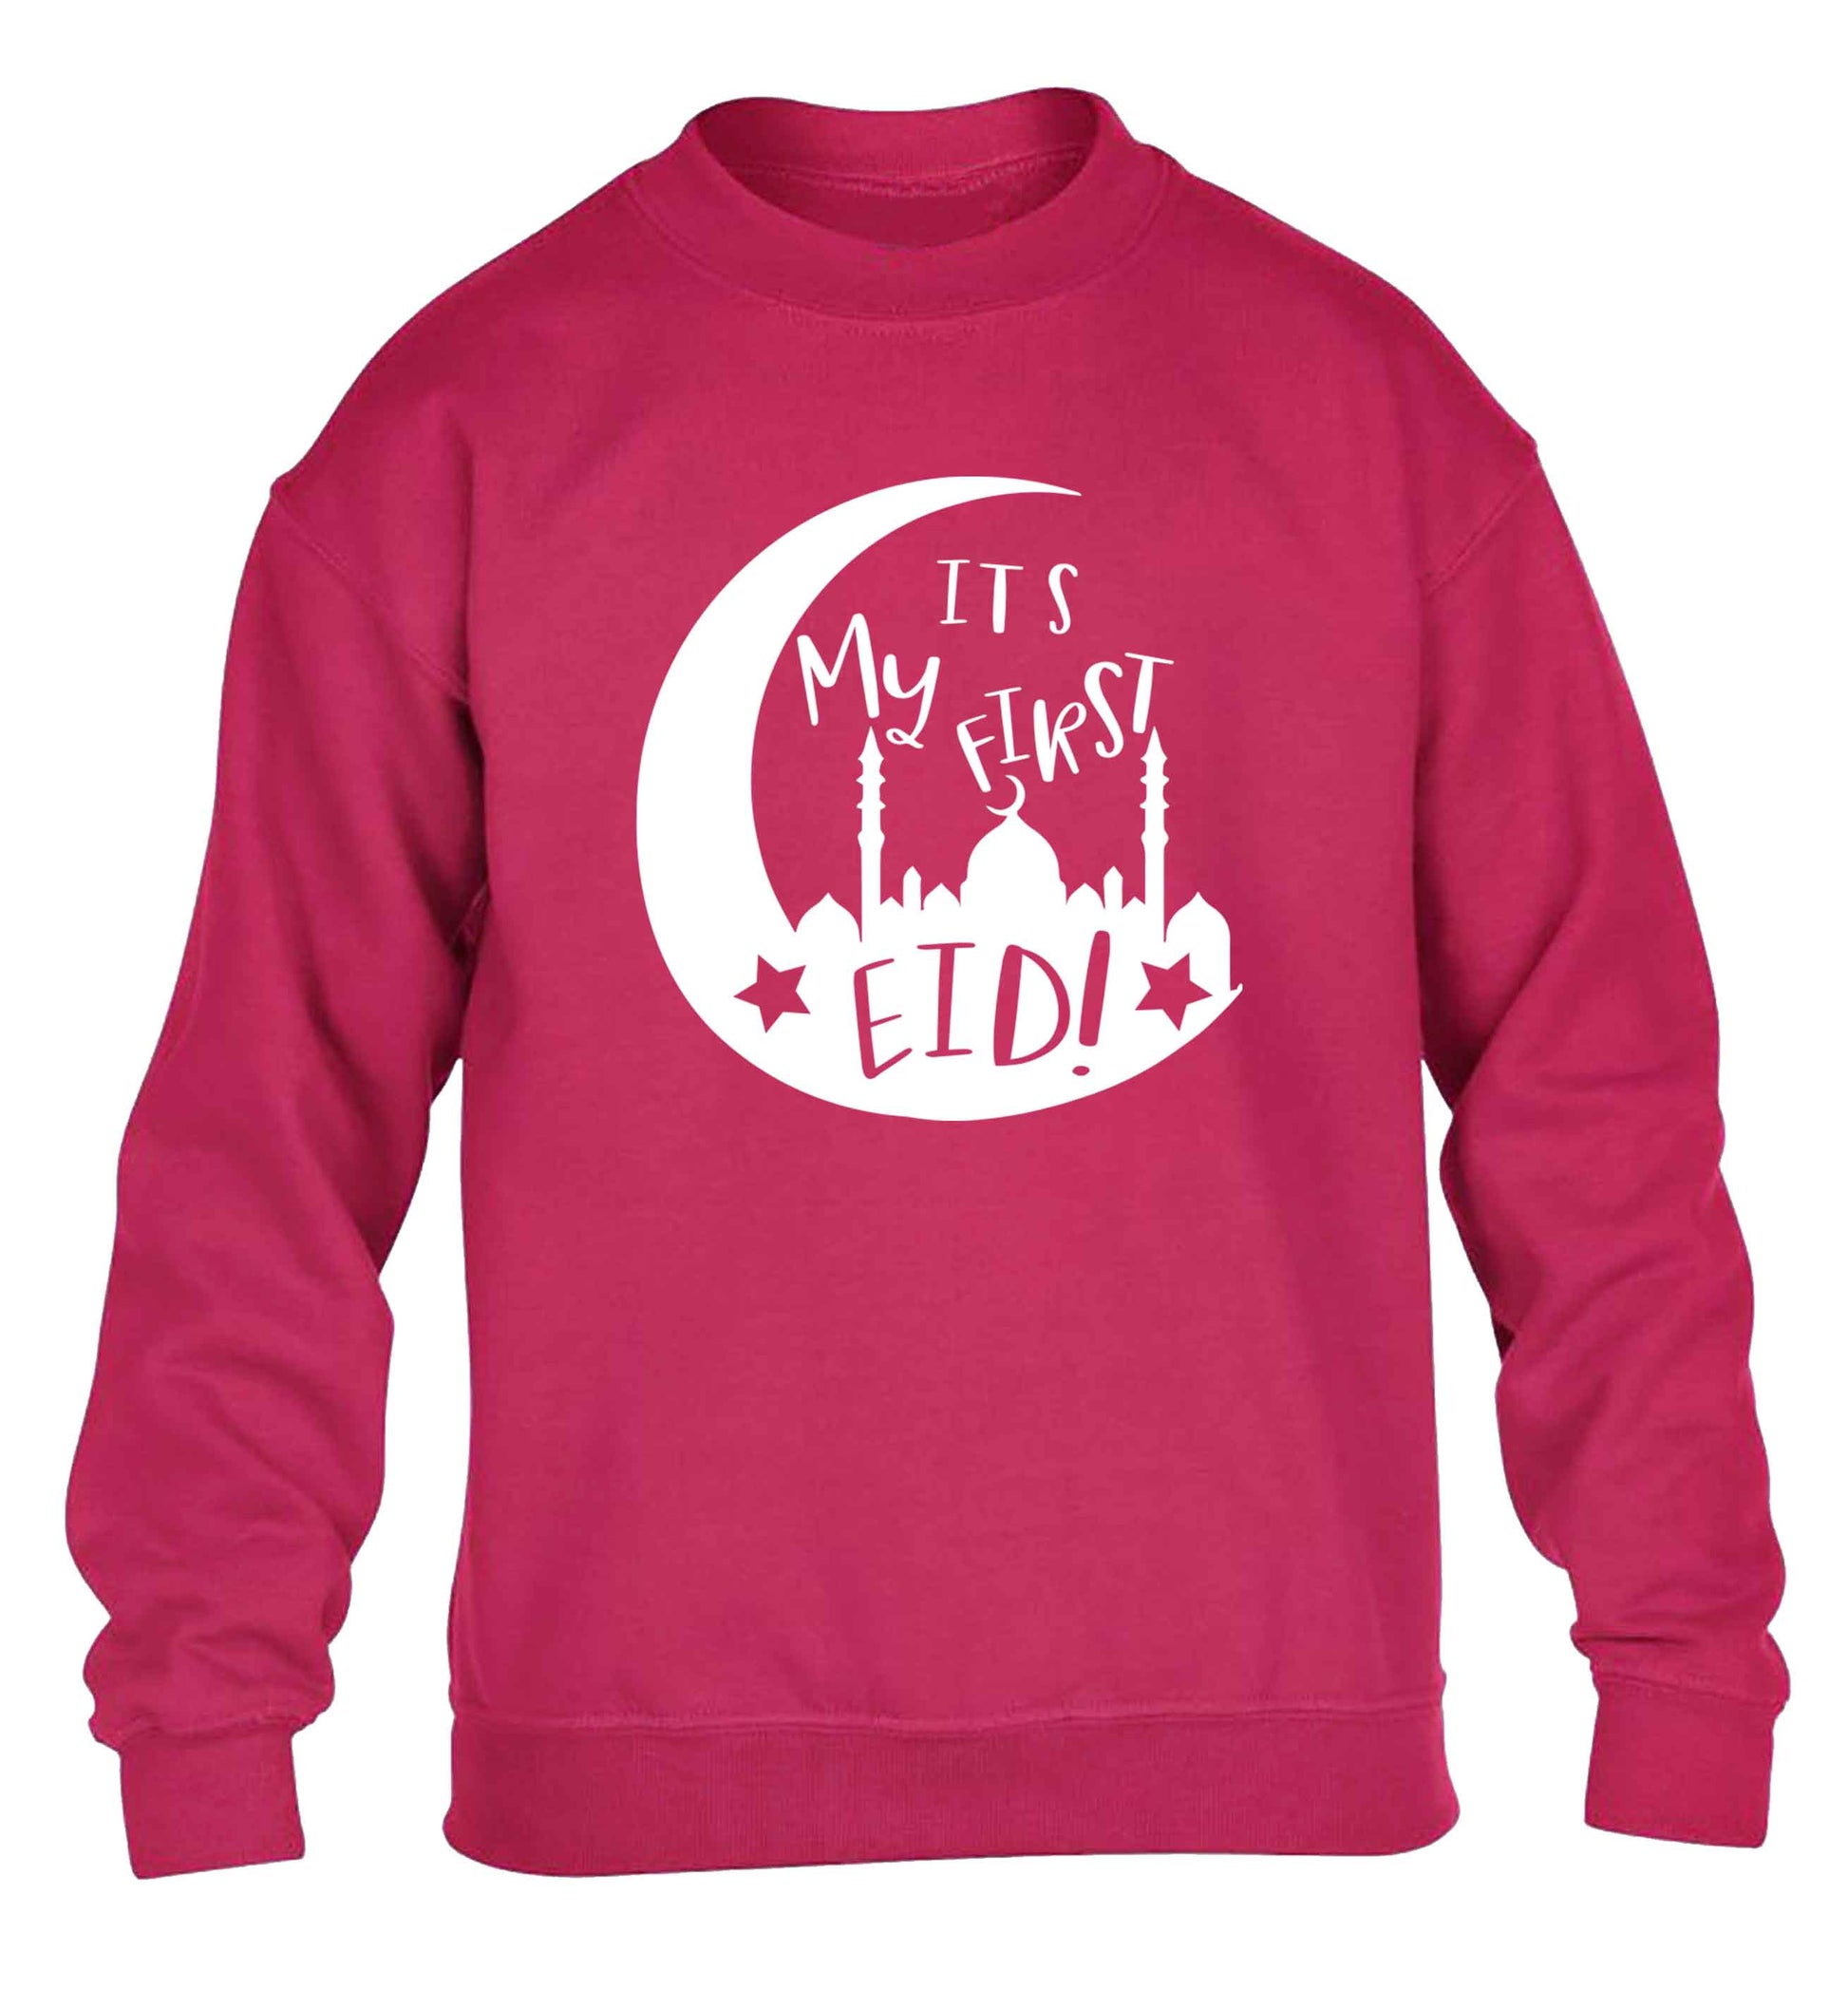 It's my first Eid moon children's pink sweater 12-13 Years